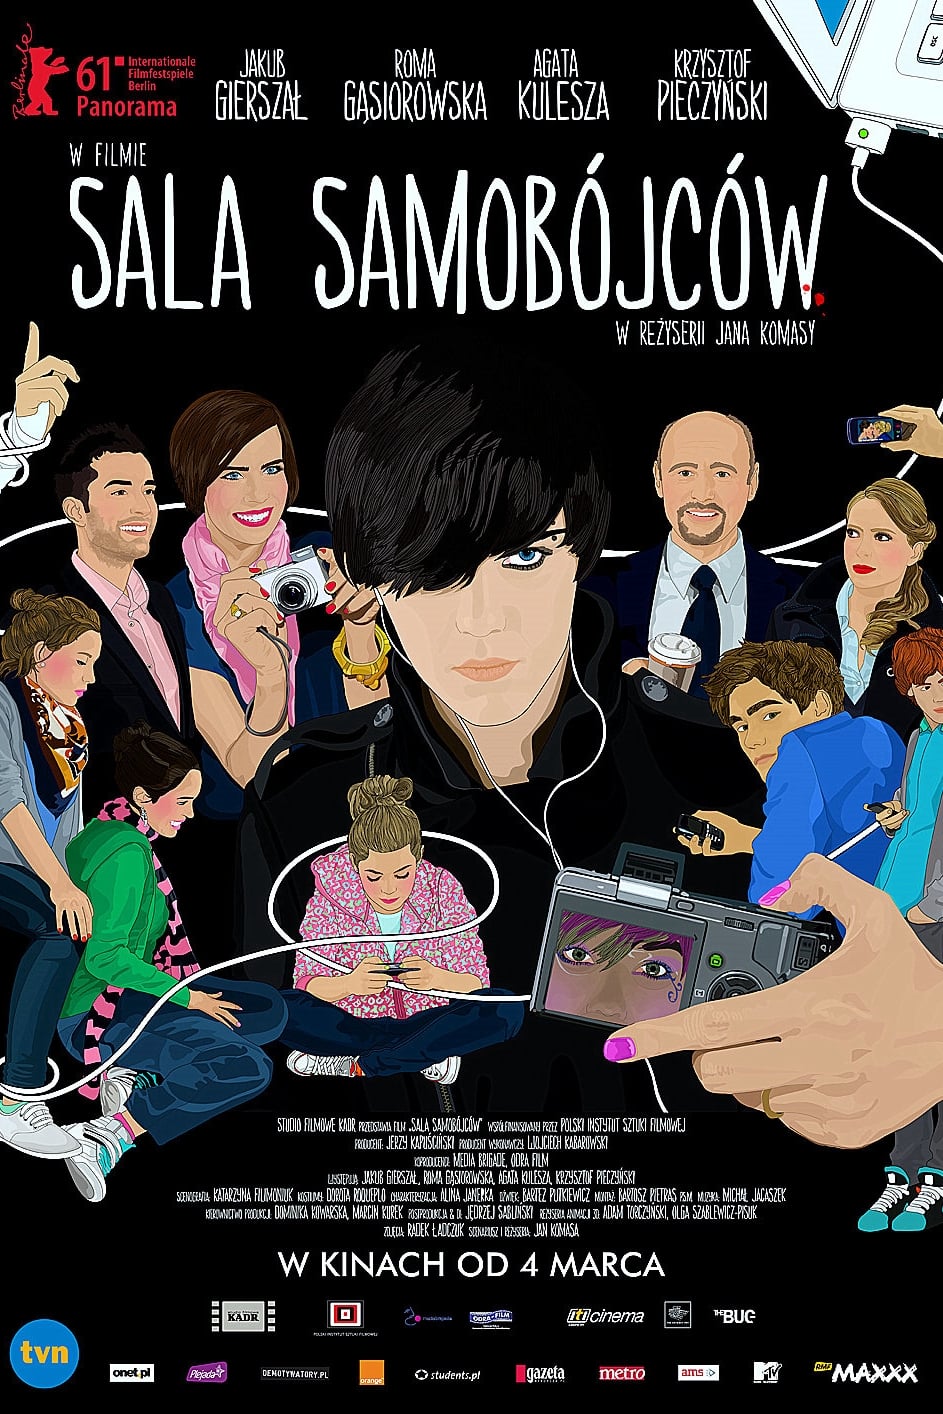 Plakat Filmu Sala samobójców (2011)